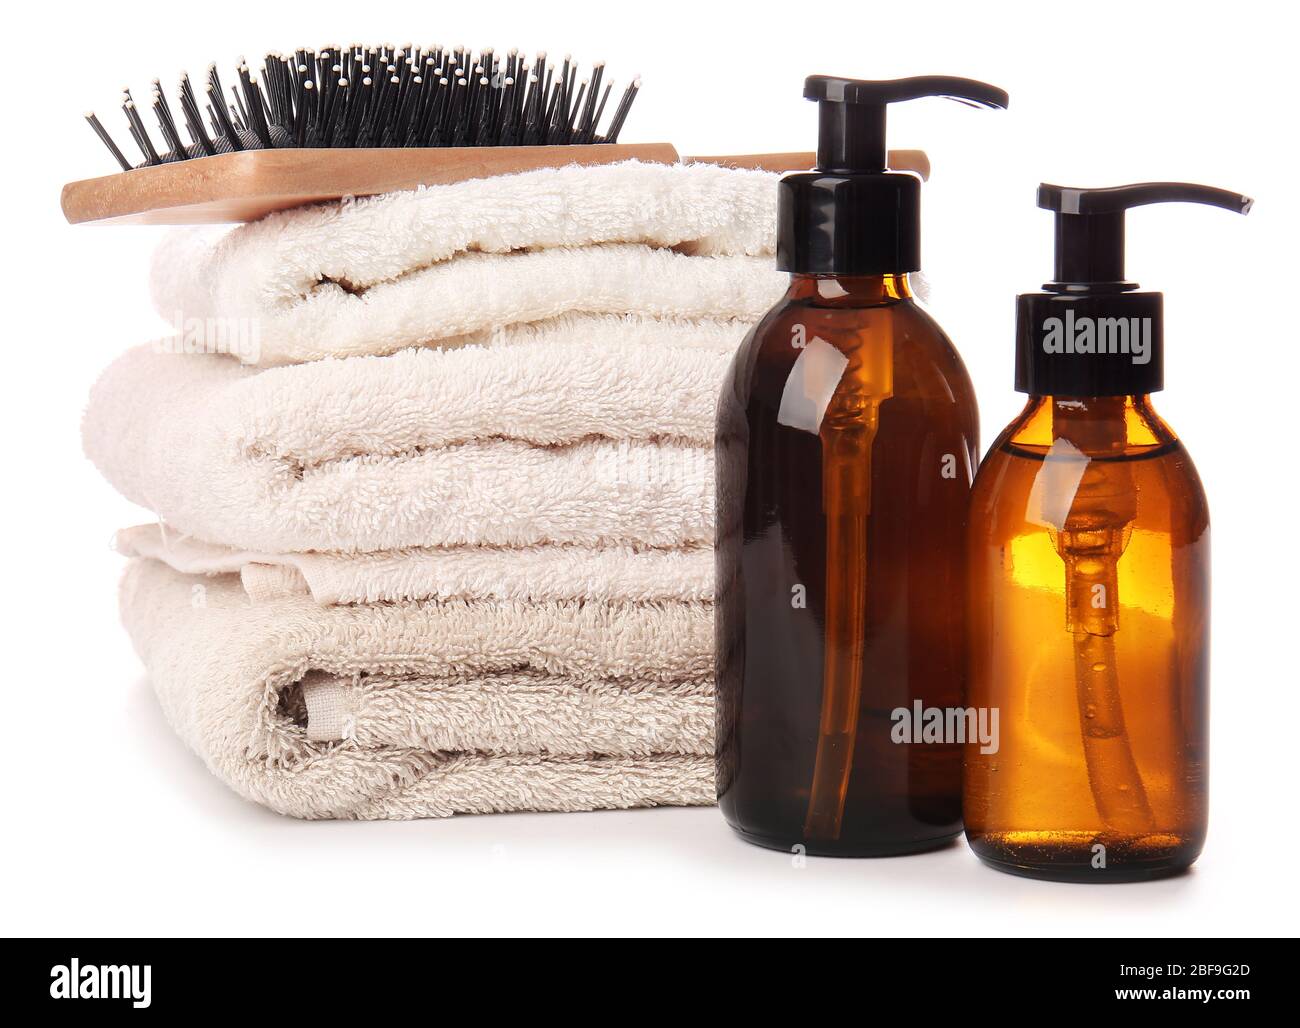 Shampoo, brush and towels on white background Stock Photo